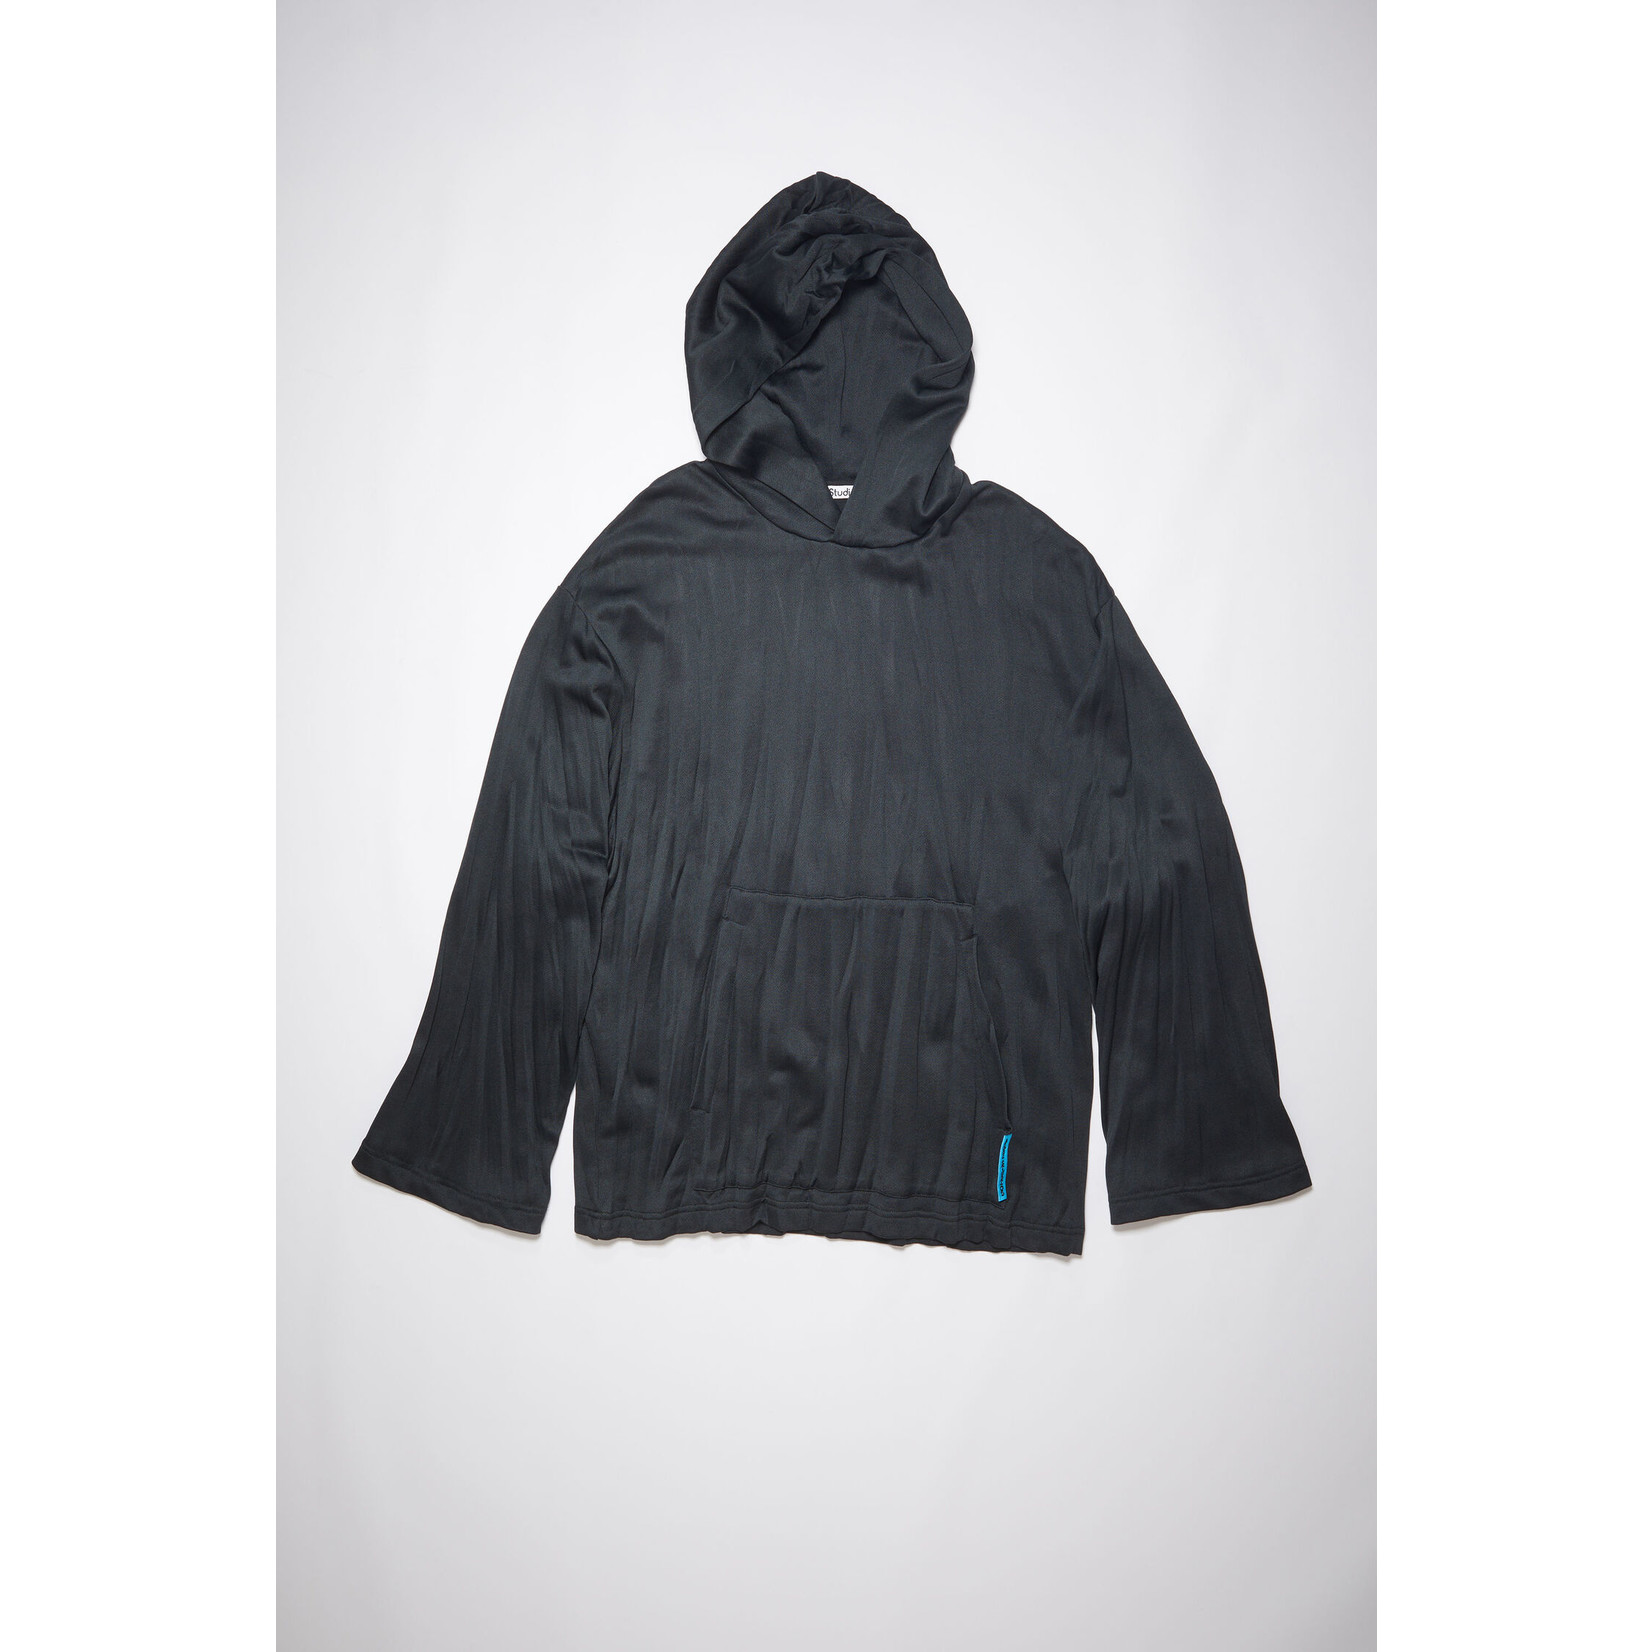 Acne Studios Acnestudios hooded sweatshirt , black